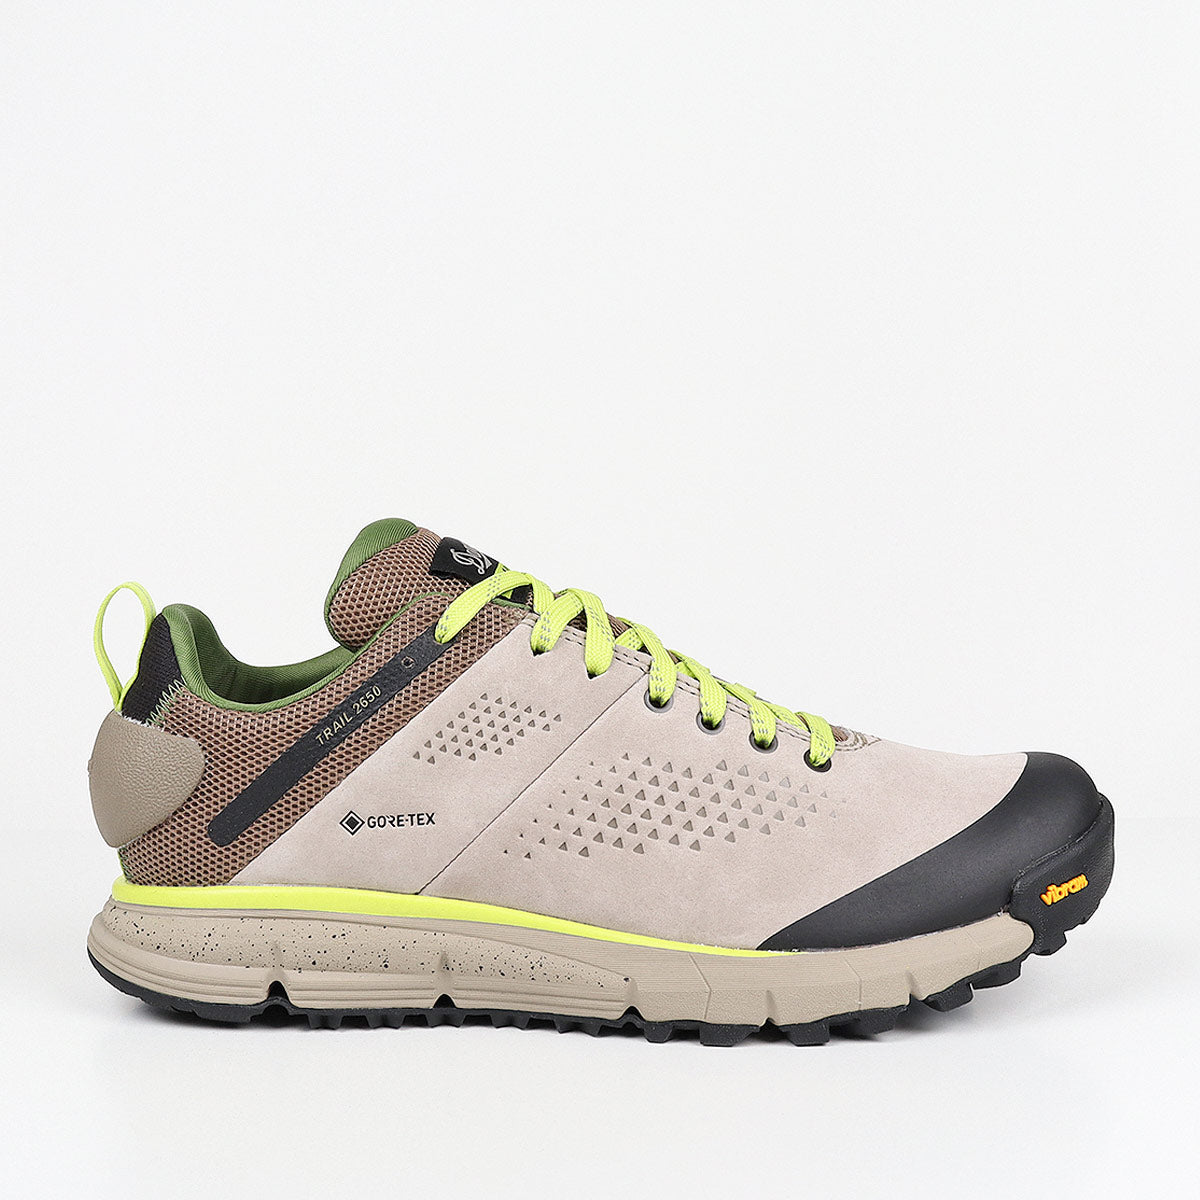 Danner Trail 2650 3" GTX Shoes - D Standard Fit, Tan Meadow Greens GTX, Detail Shot 1